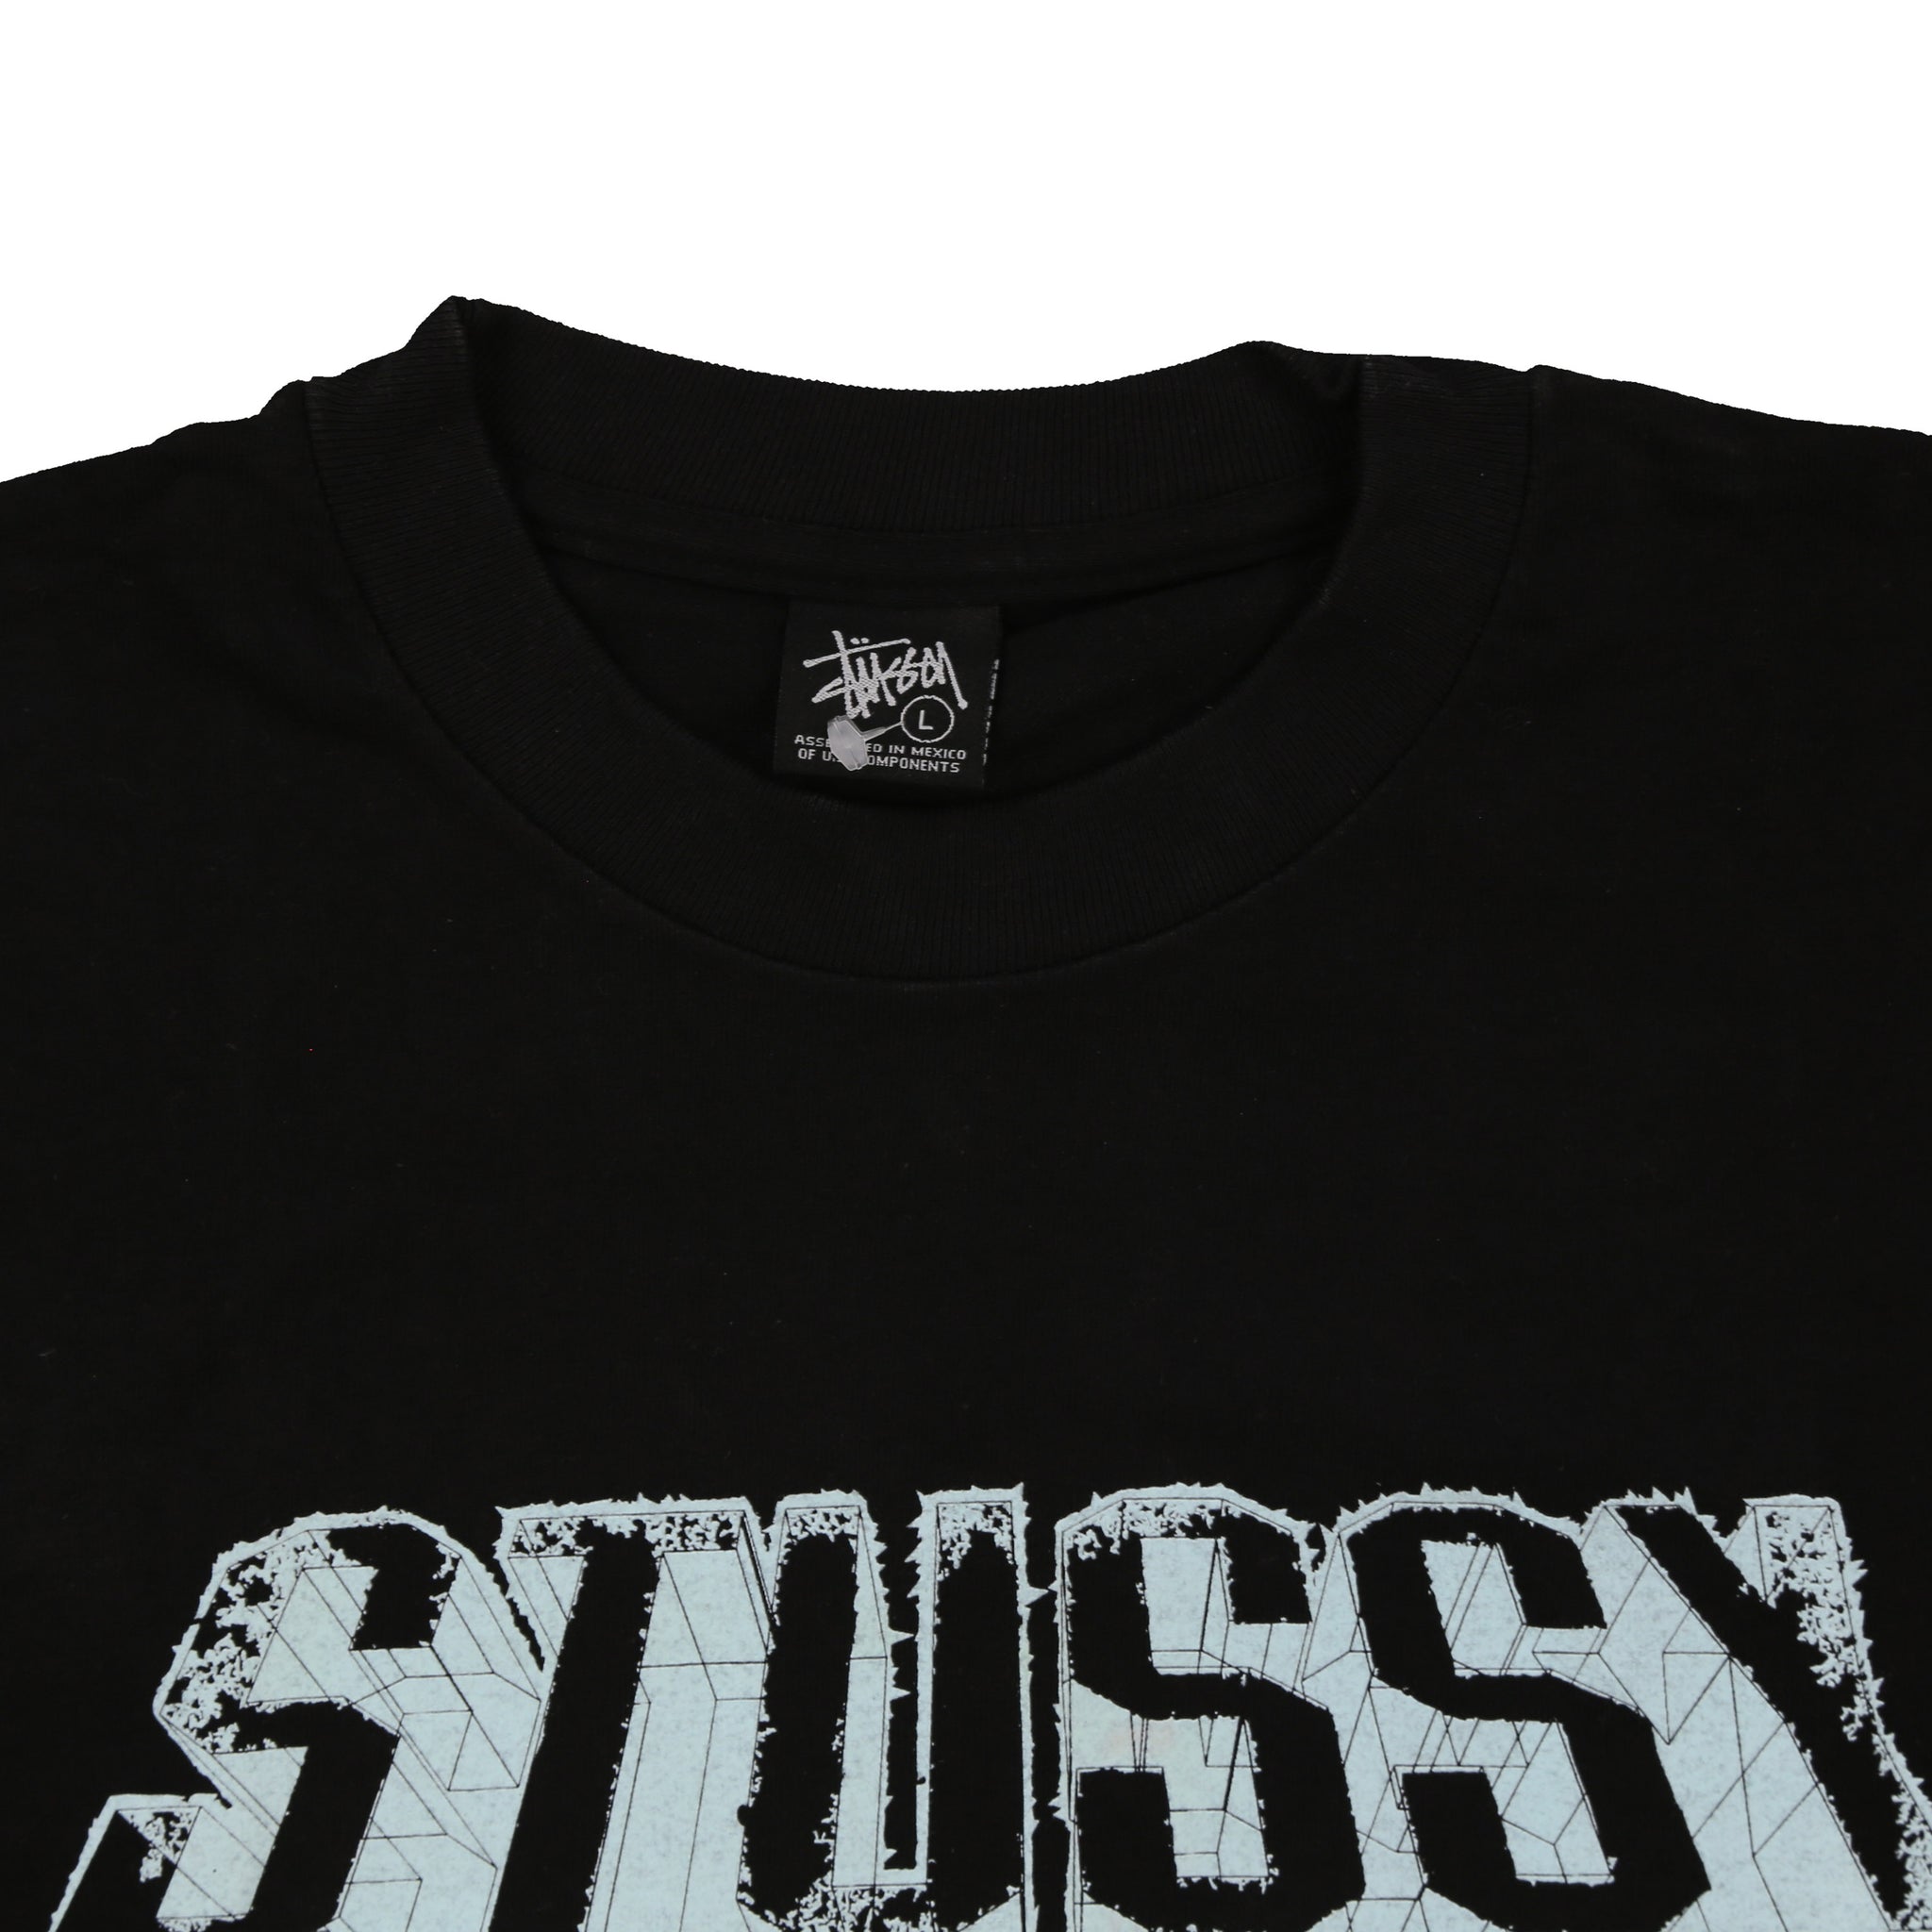 New 2006 Stussy World Tour x Mark Ward Tshirt